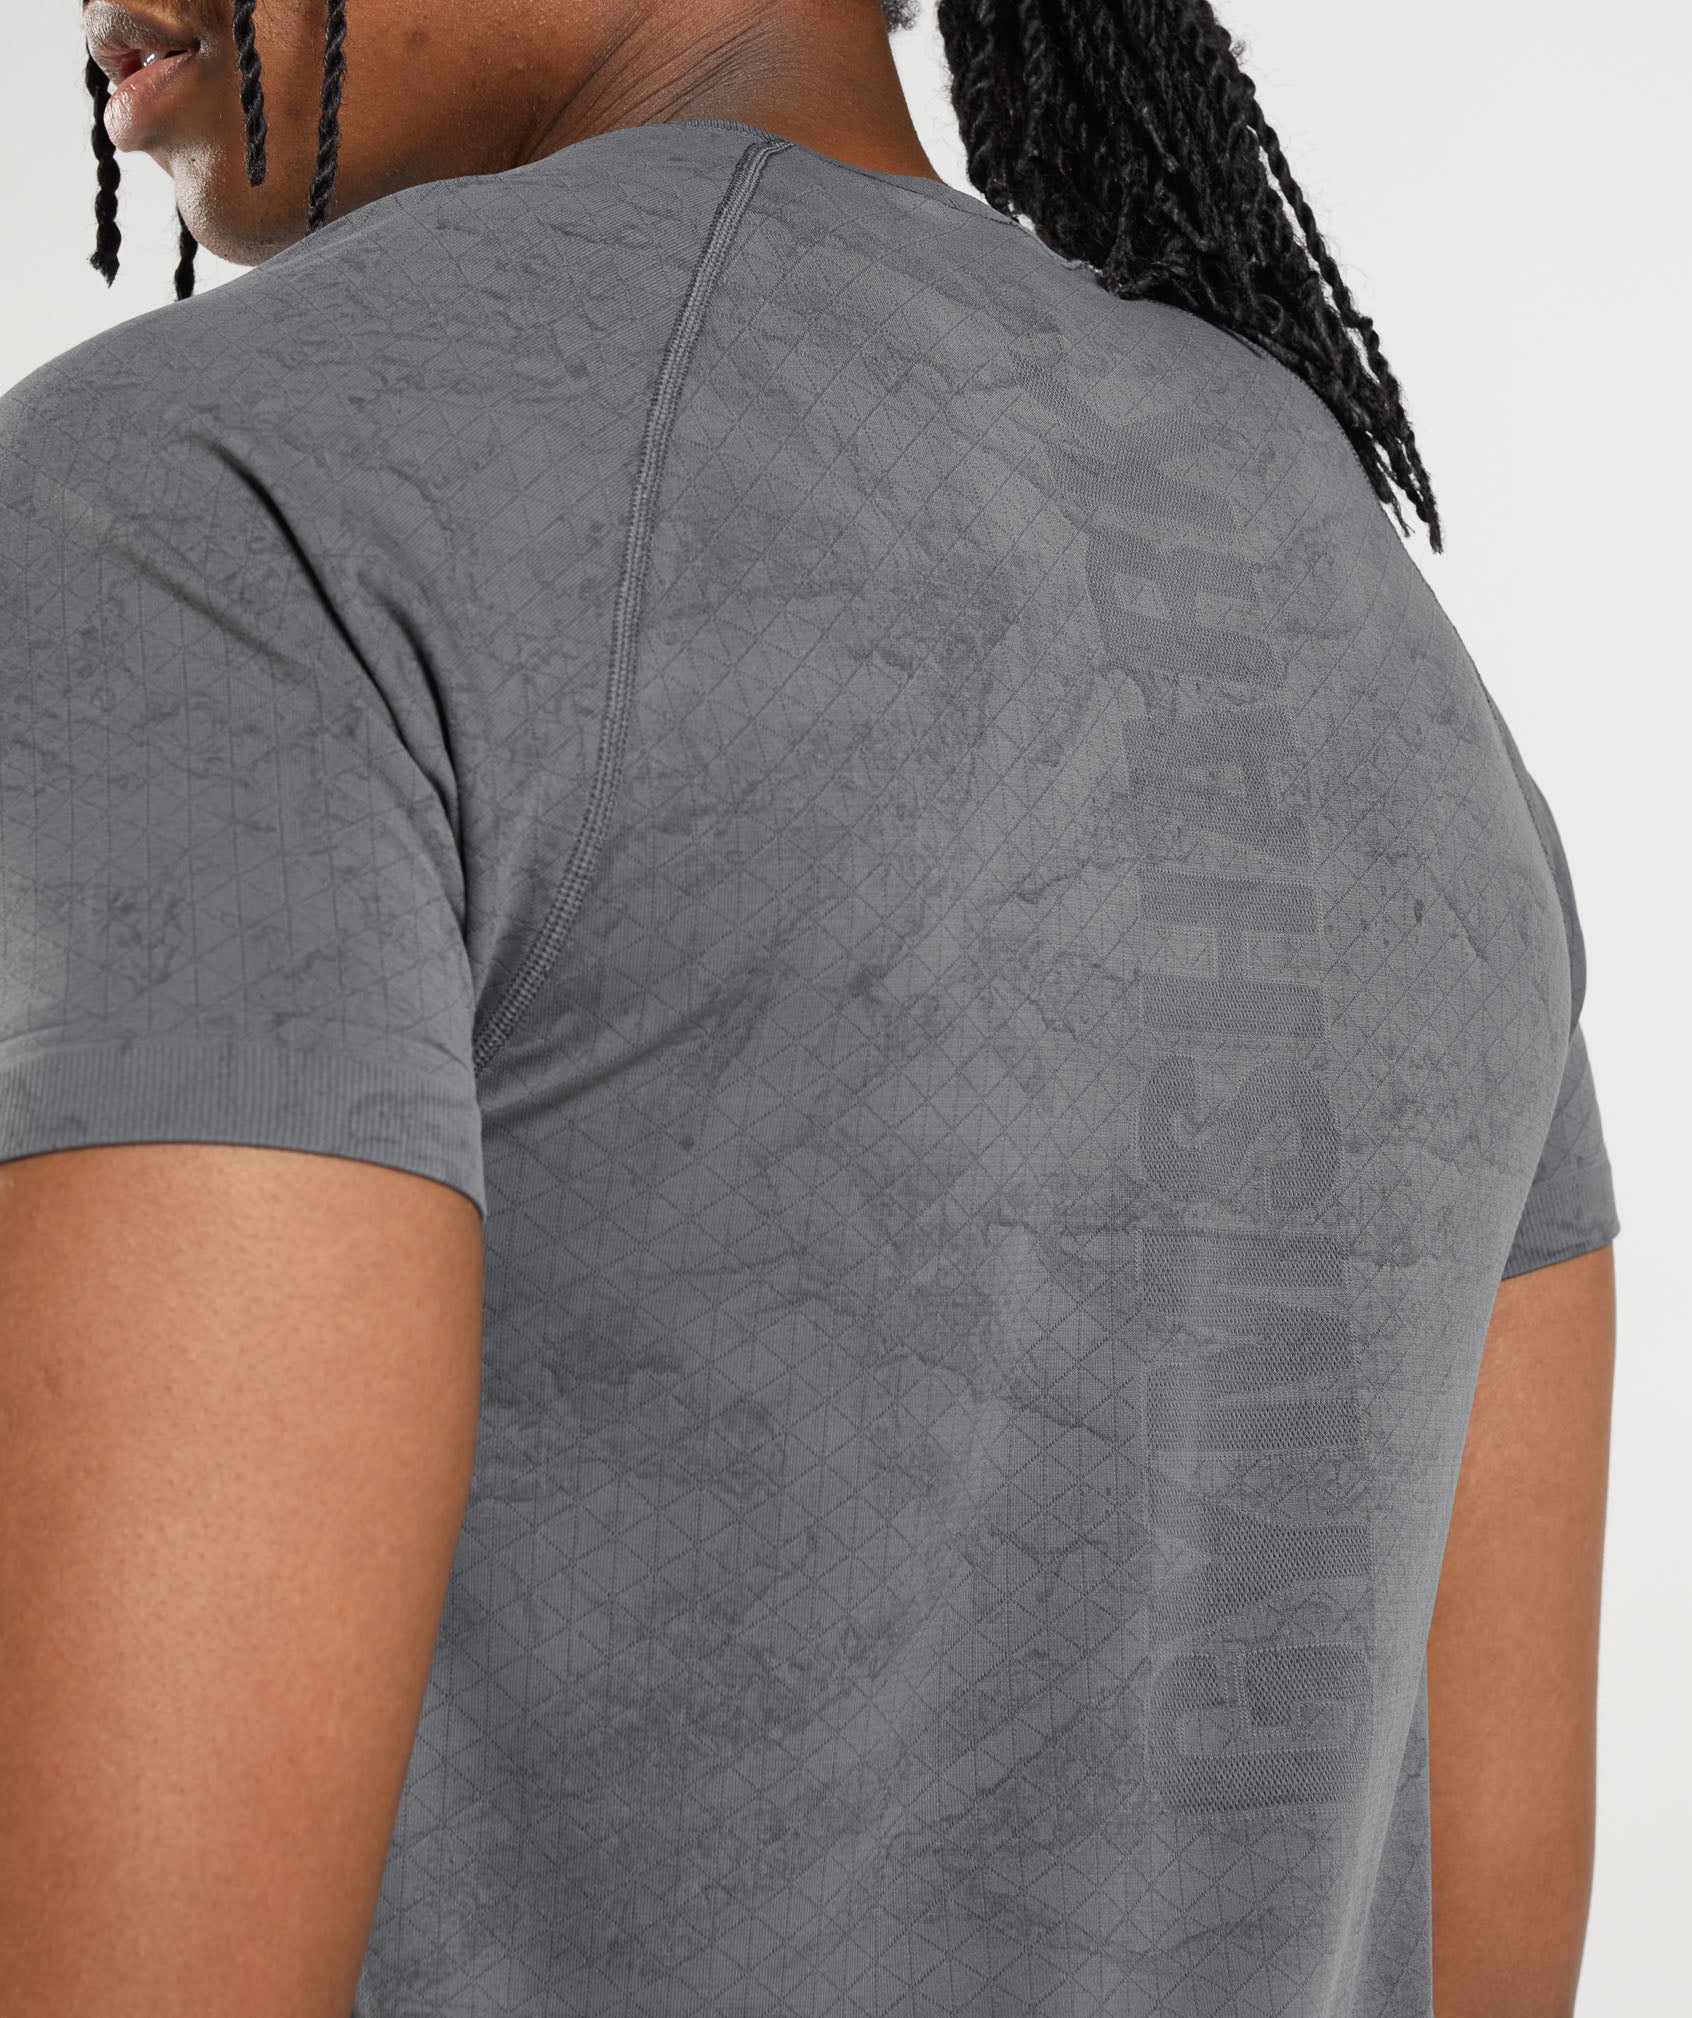 Gymshark Essential T-Shirt - Charcoal Grey Marl